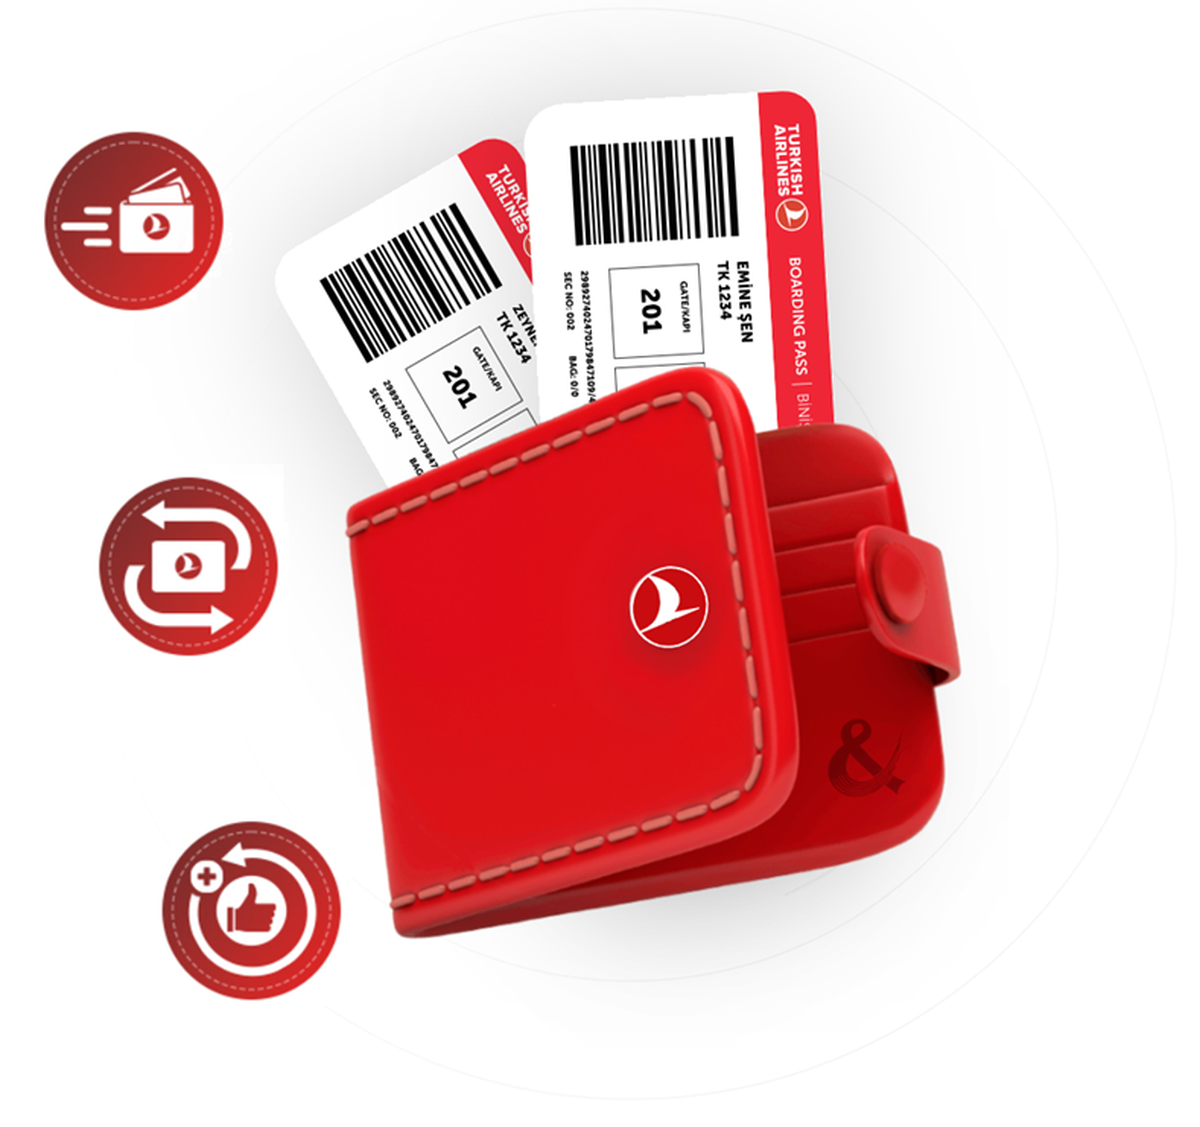 Turkish Airlines lanza TK Wallet